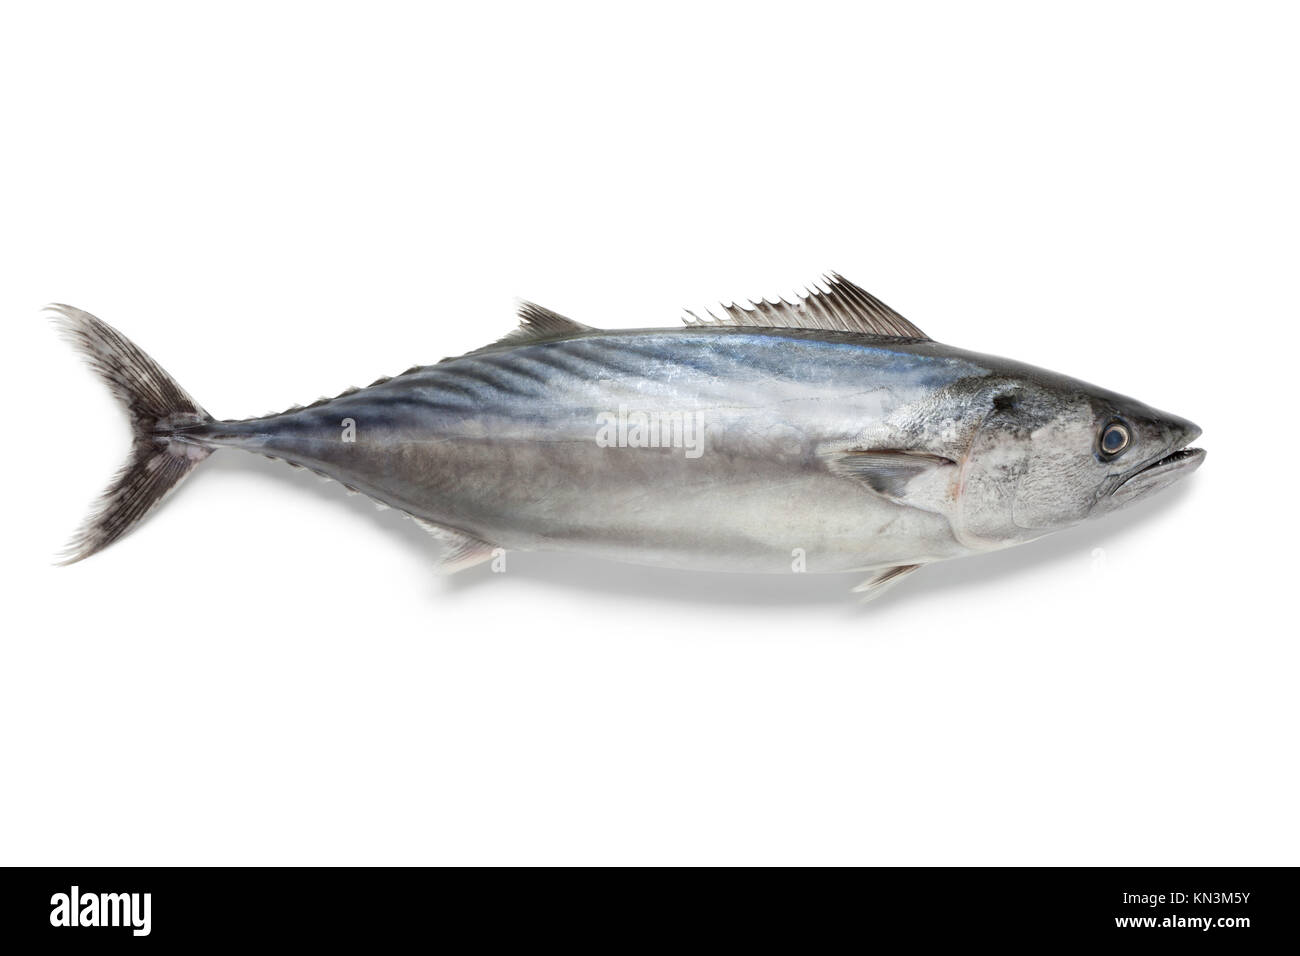 Singlre fresh bonito fish at white background. Stock Photo